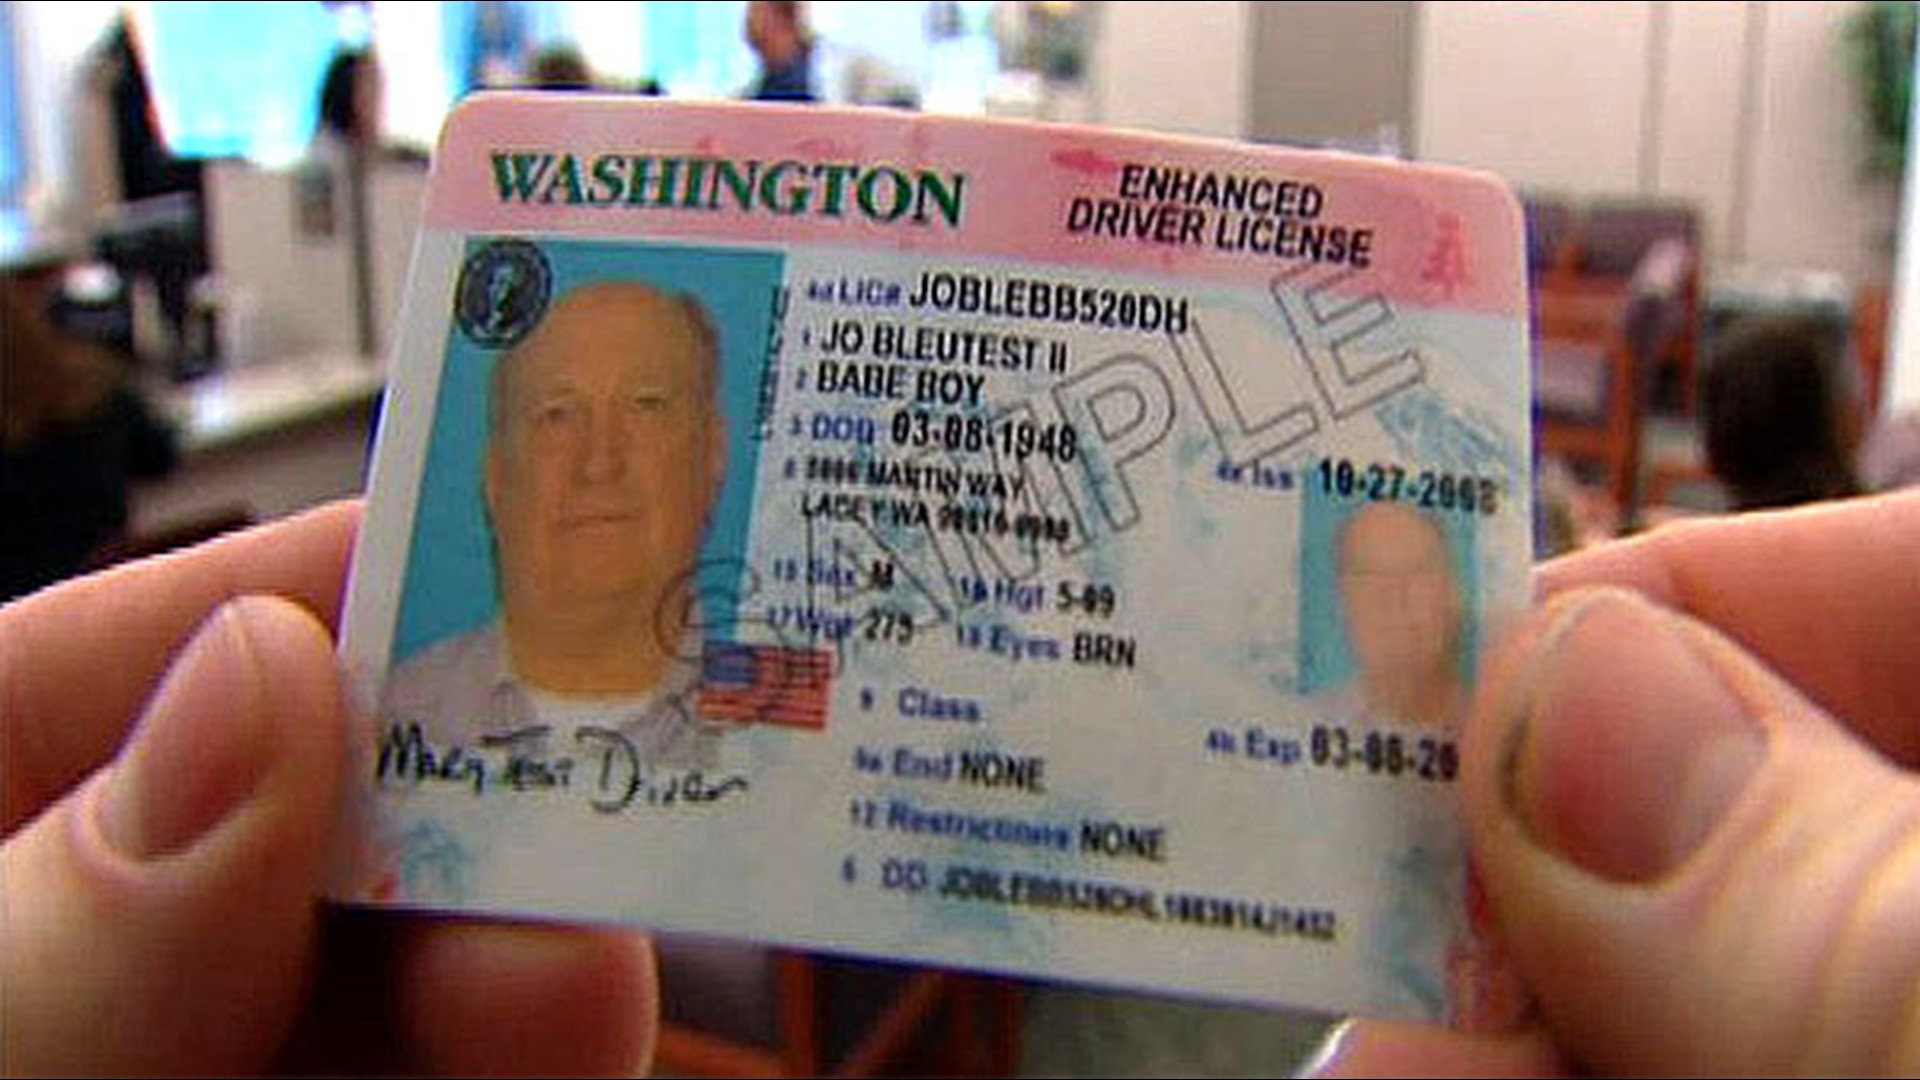 Washington Driver License